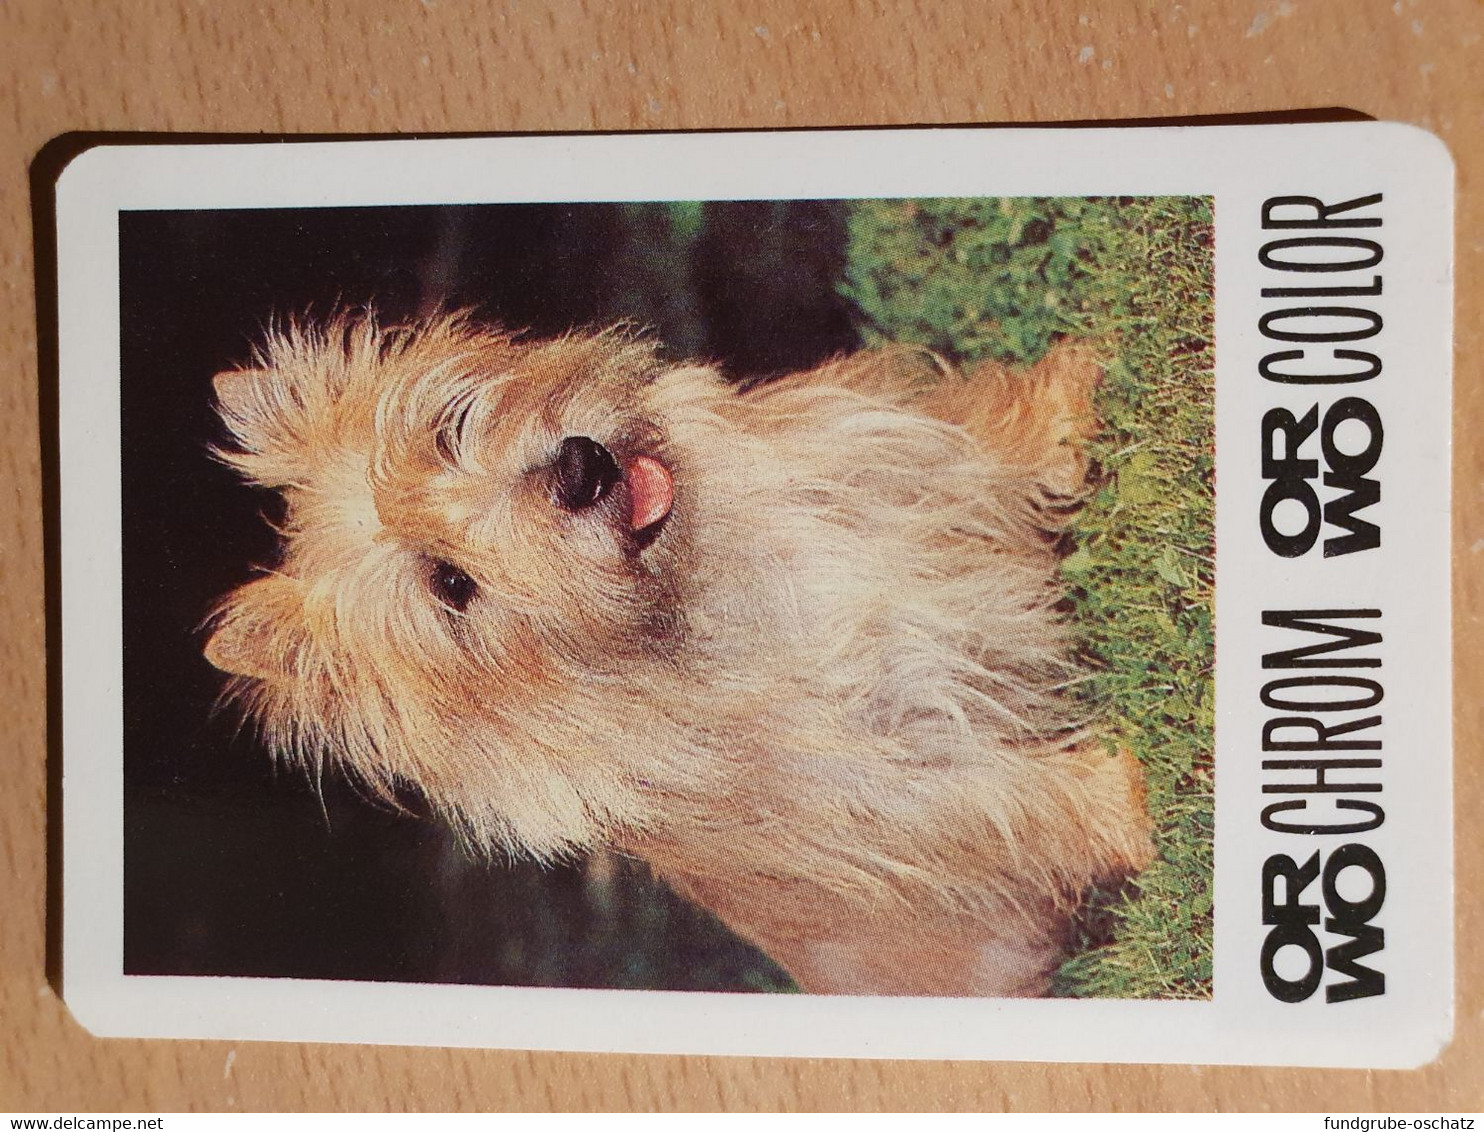 Pocket Calendar Taschenkalender DDR East Germany Filmfabrik Wolfen ORWO 1984 Hund Dog - Grand Format : 1981-90